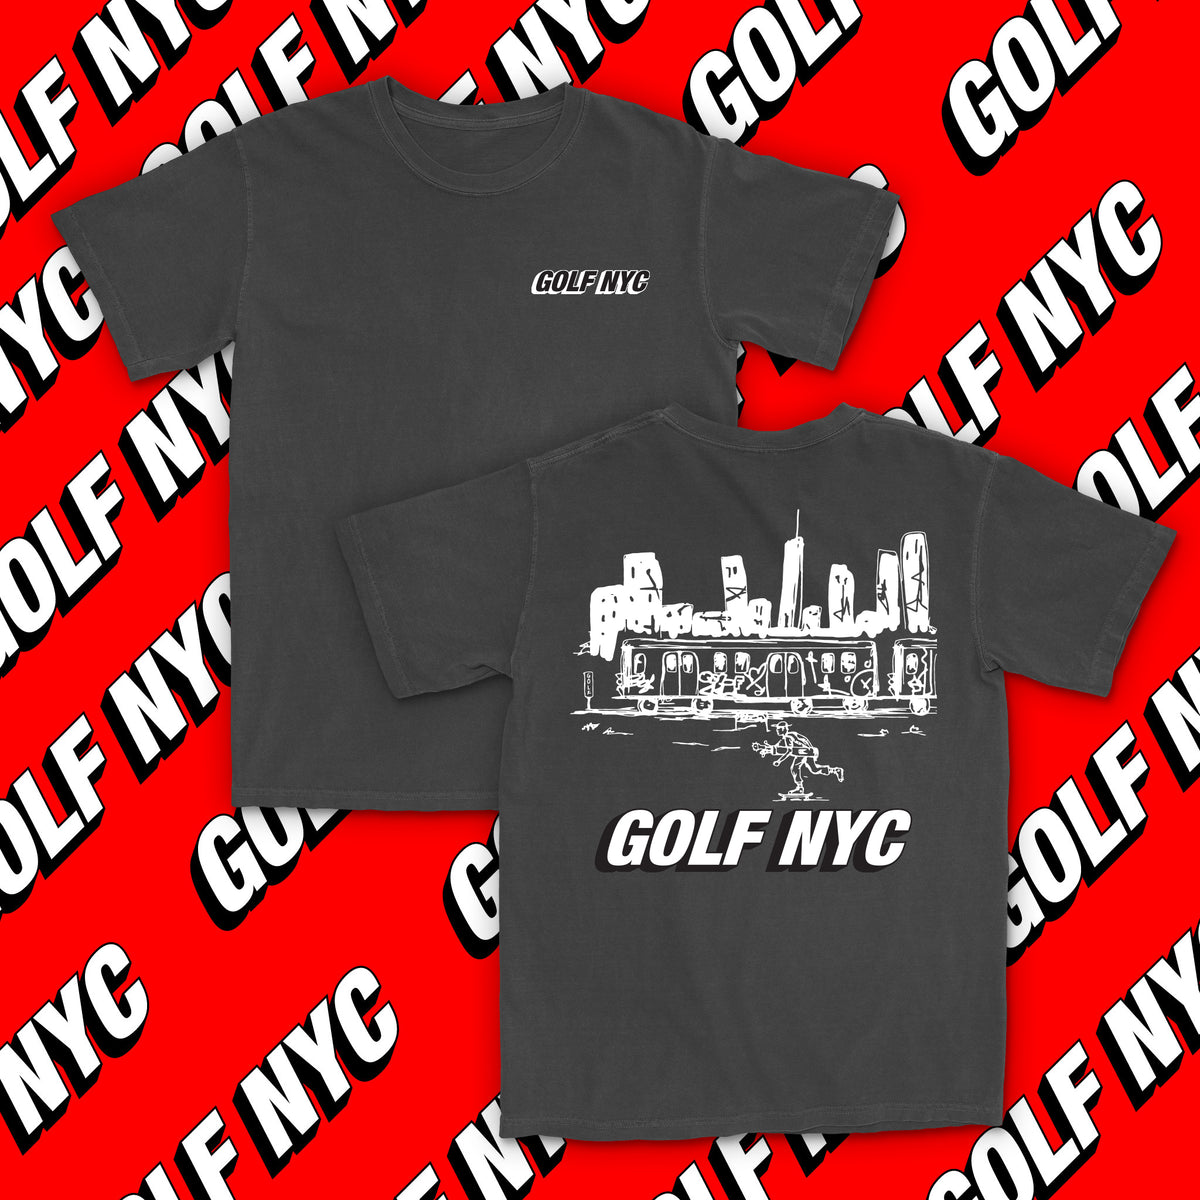 GOLF NYC (Black/White)